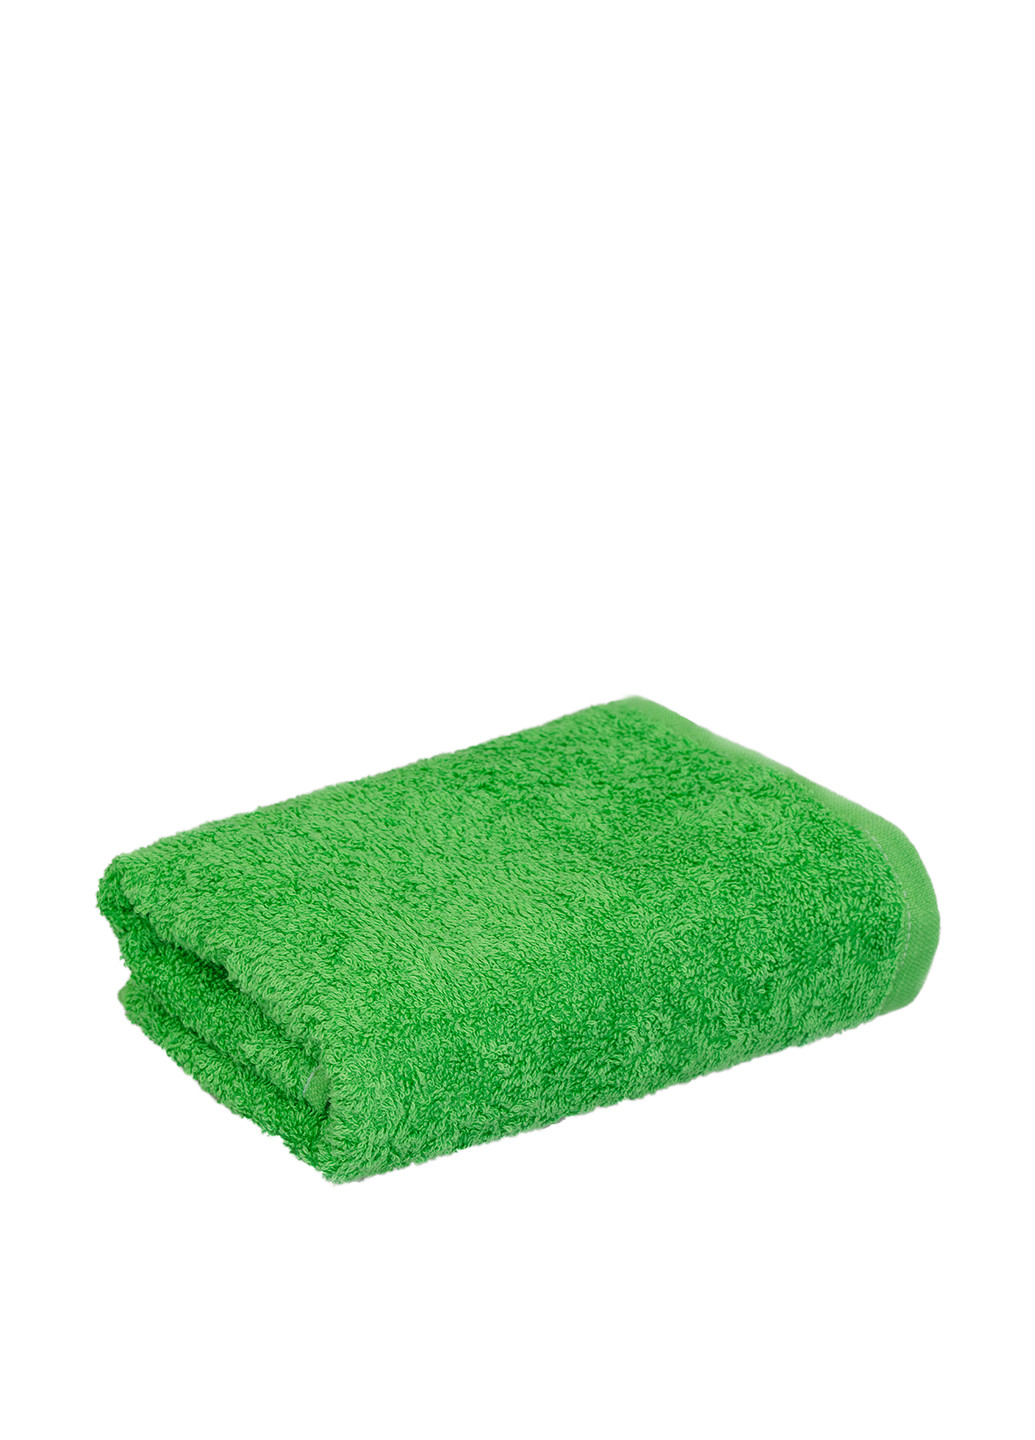 No Brand полотенце, 40х70 см однотонный зеленый производство - Туркменистан